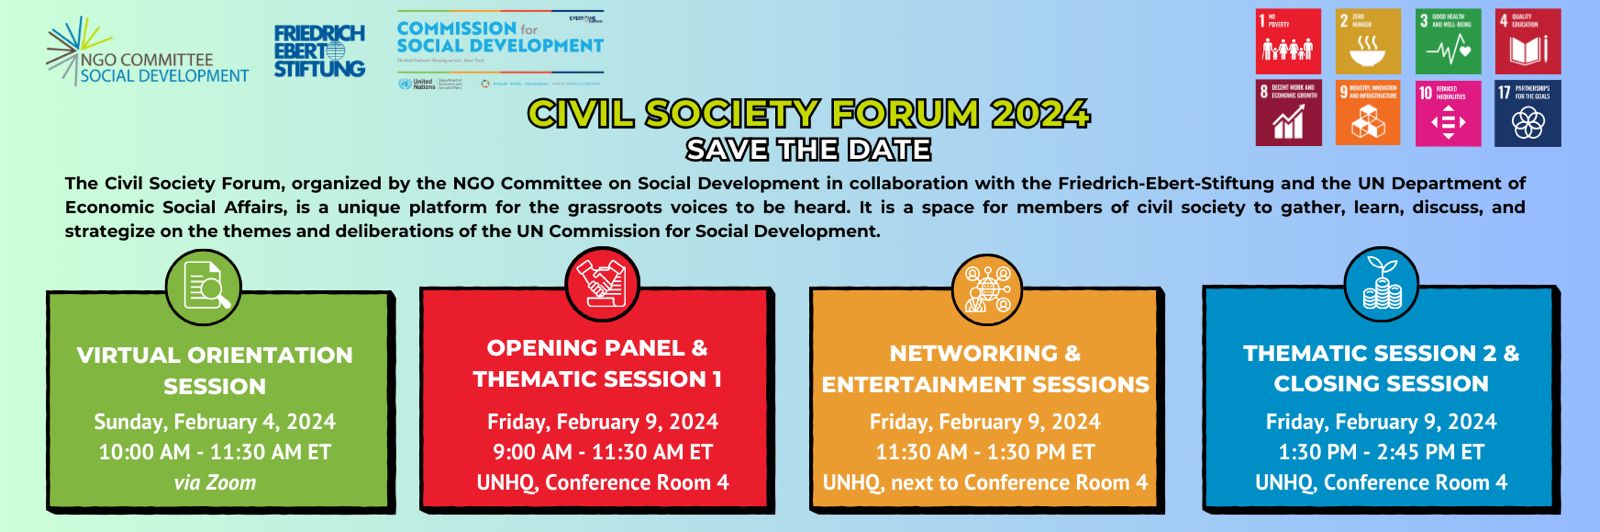 CSocD62 Civil Society Forum